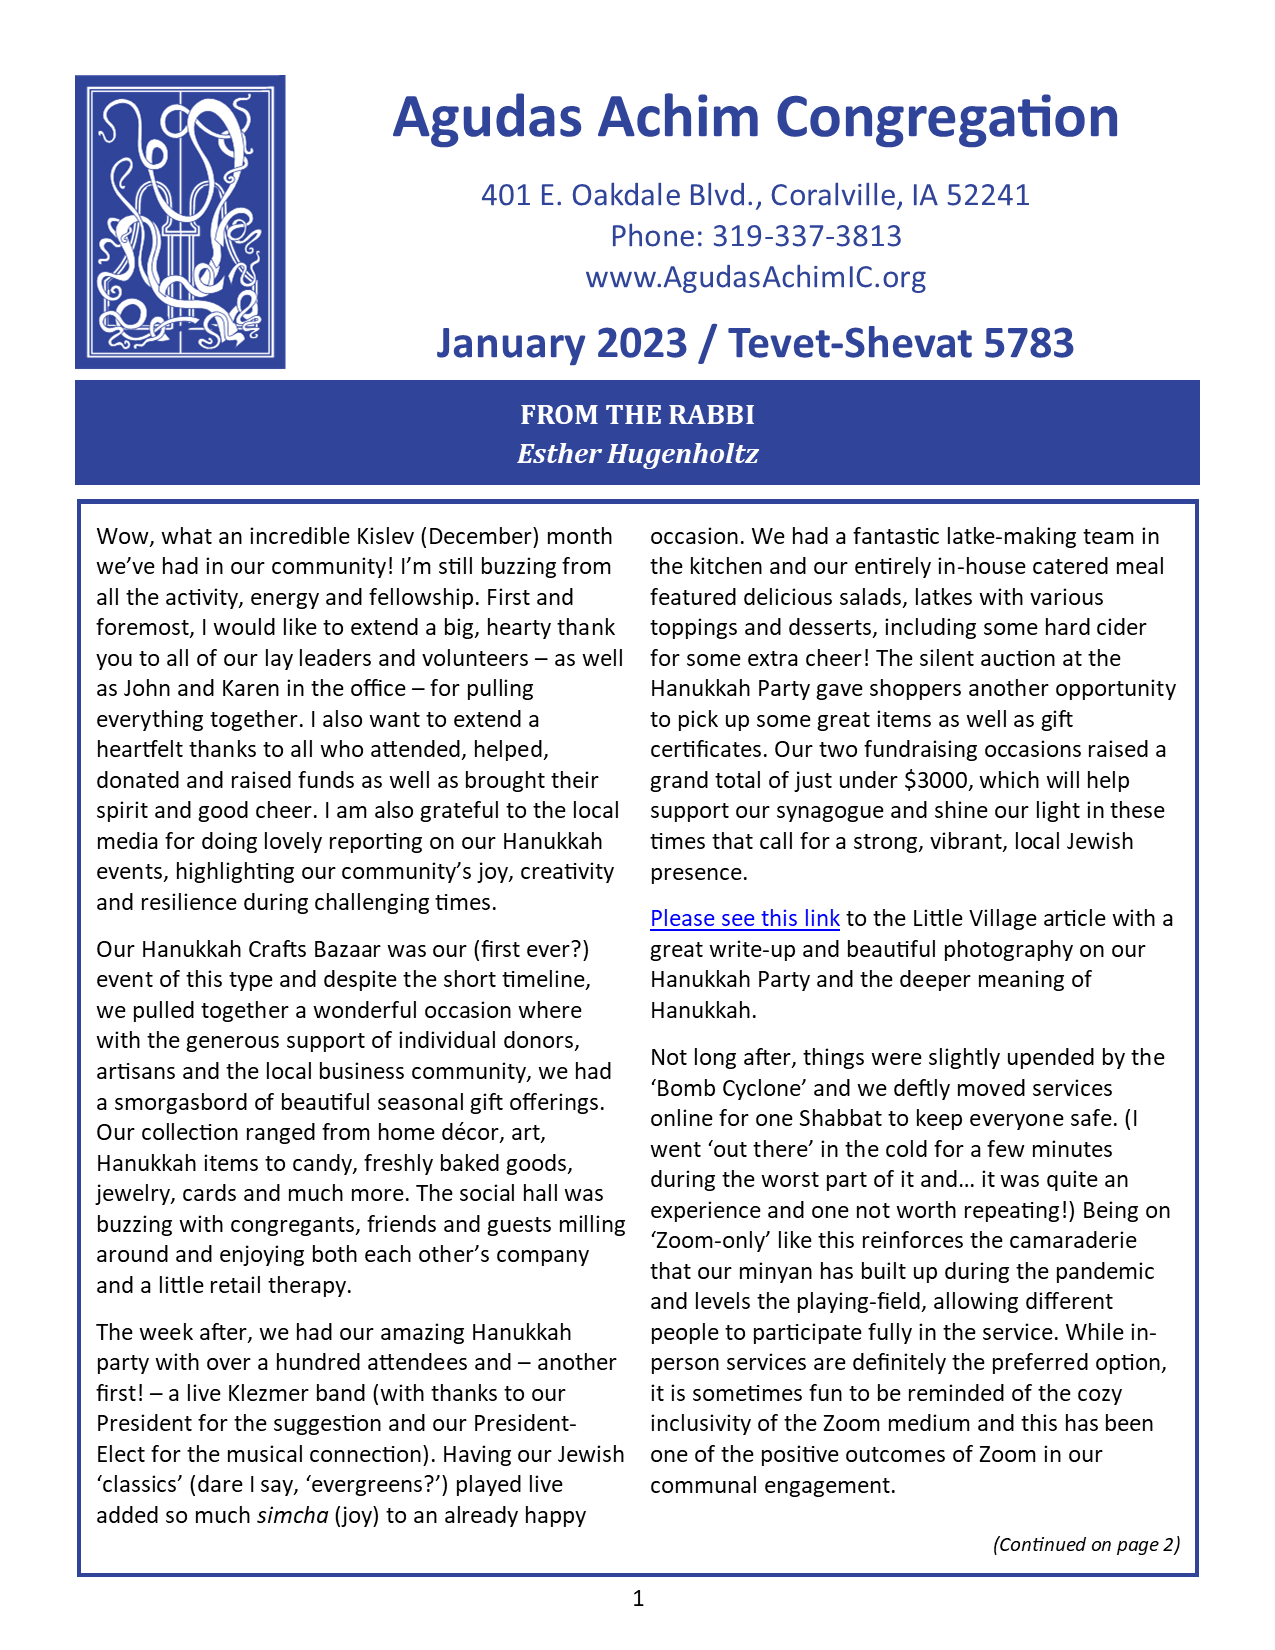 January 2023 Bulletin Cover